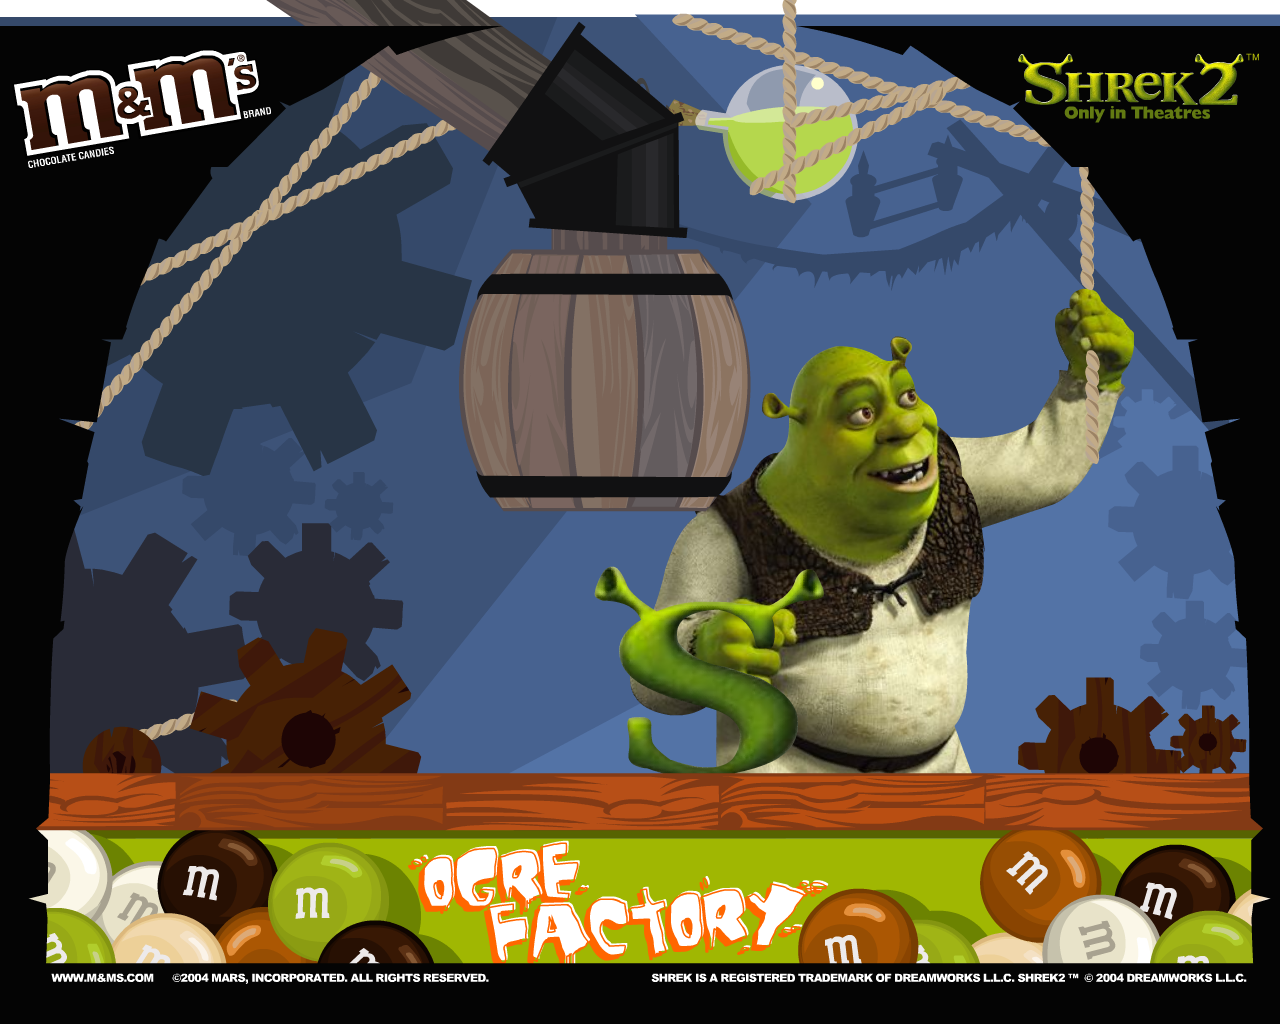 Shrek 2 download the last version for apple